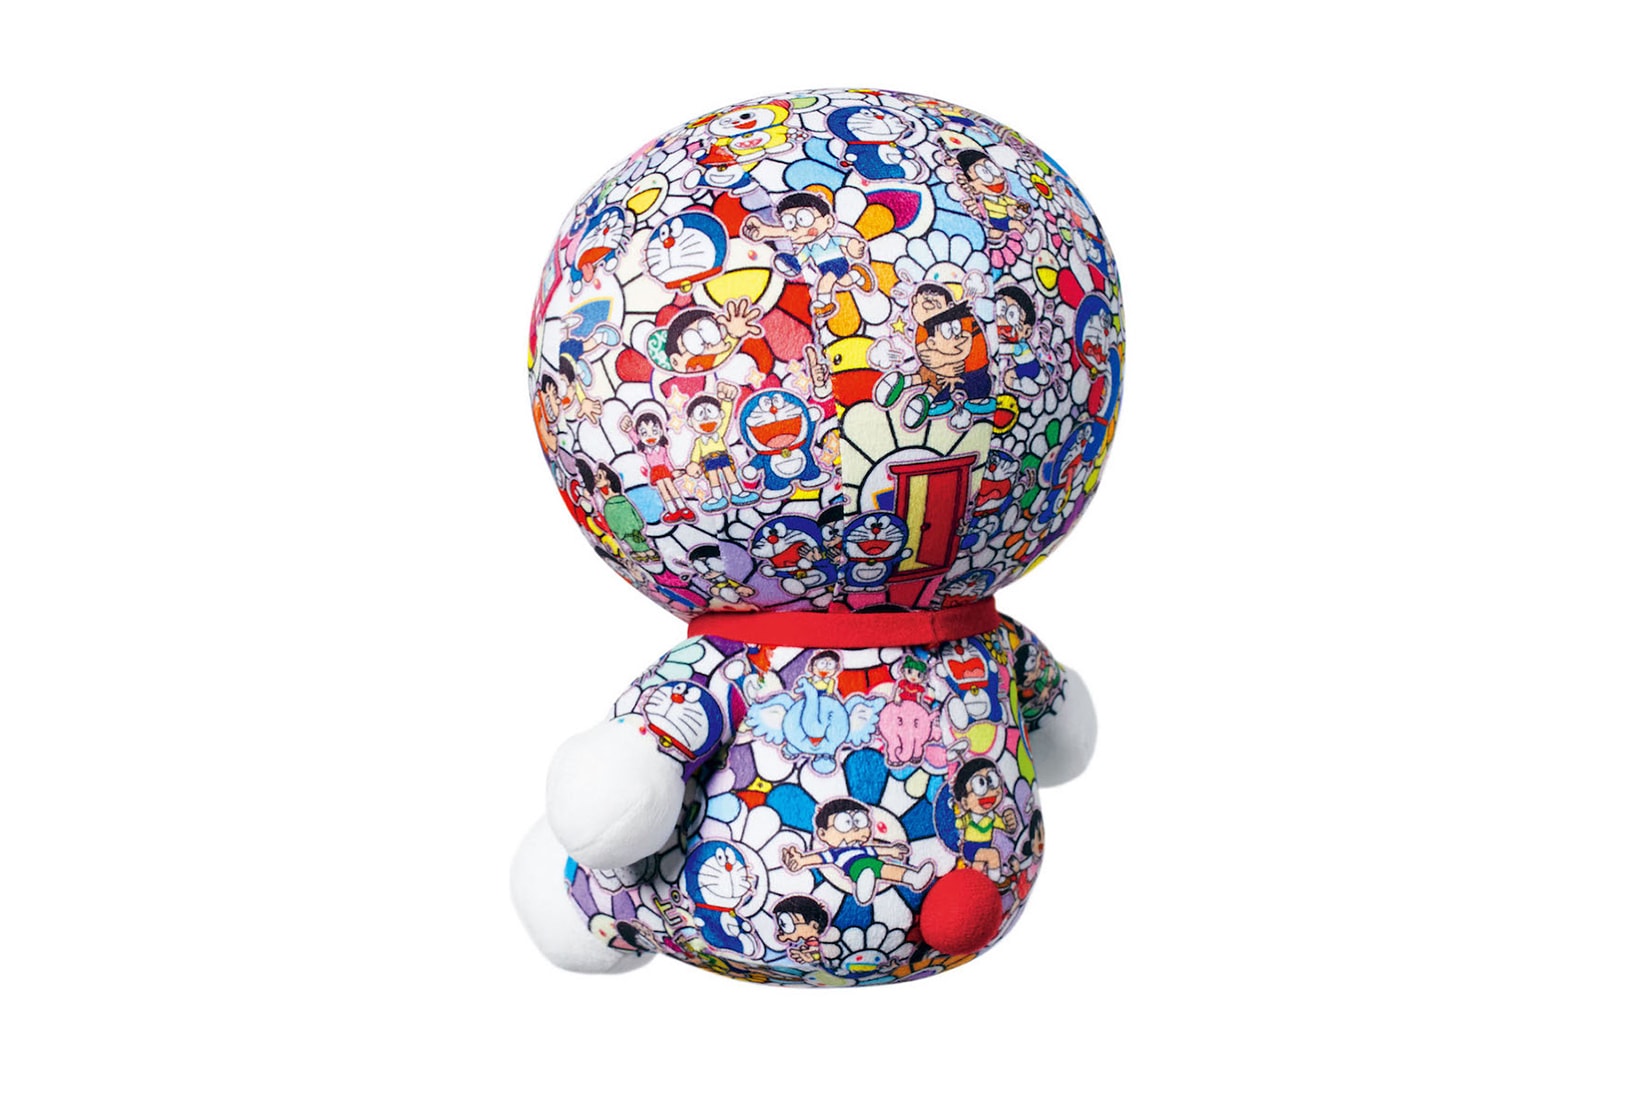 Takashi Murakami Doraemon Uniqlo UT Collection collaboration april 26 2018 release date info drop may global Fujiko Fujio